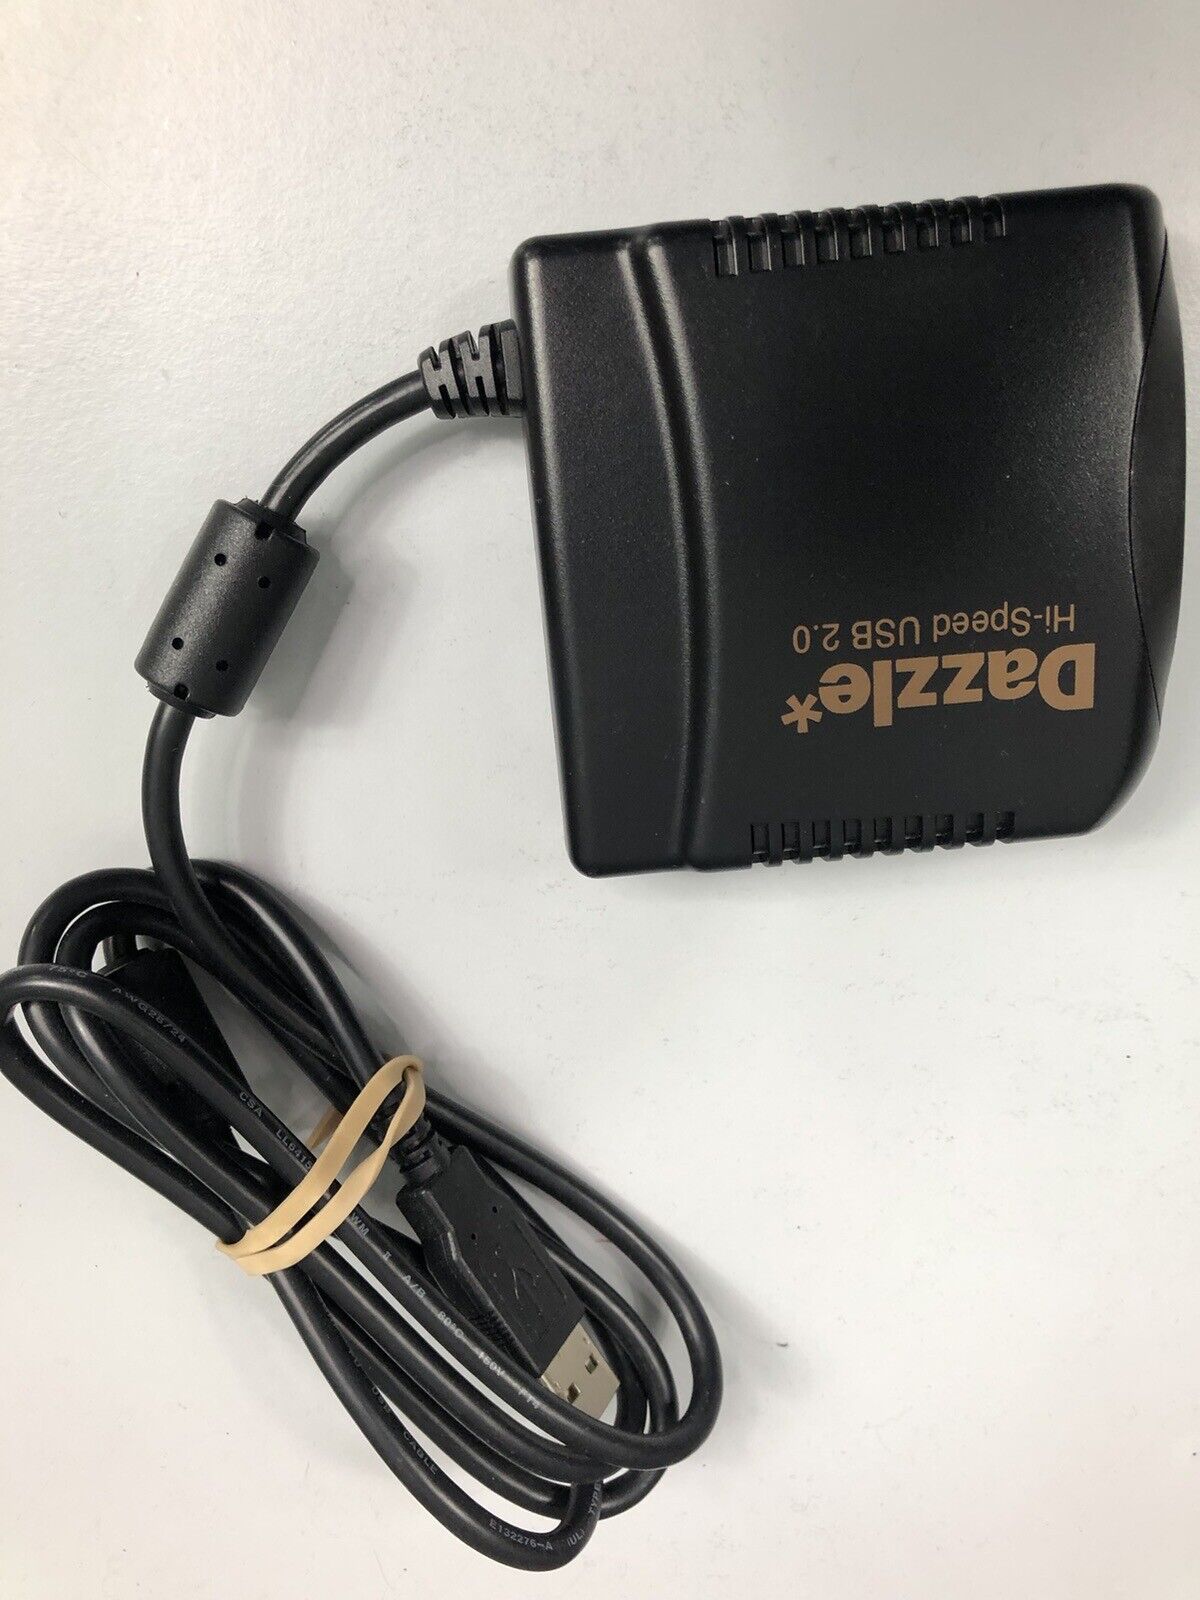 ZIO Corp Dazzle Hi-Speed USB 2.0 Micro Drive Compact Flash Card Reader Writer